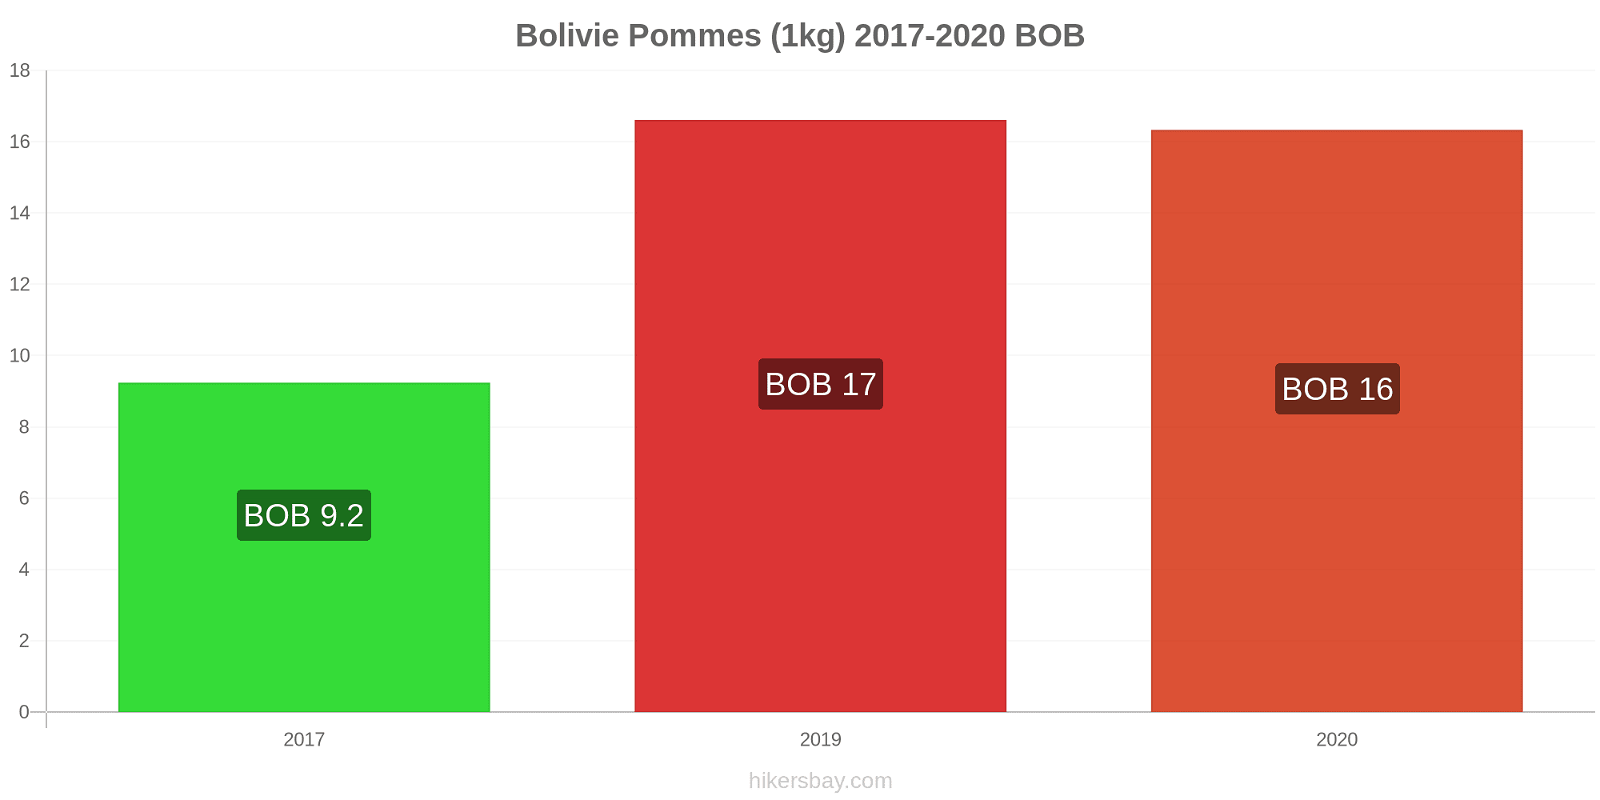 Bolivie changements de prix Pommes (1kg) hikersbay.com